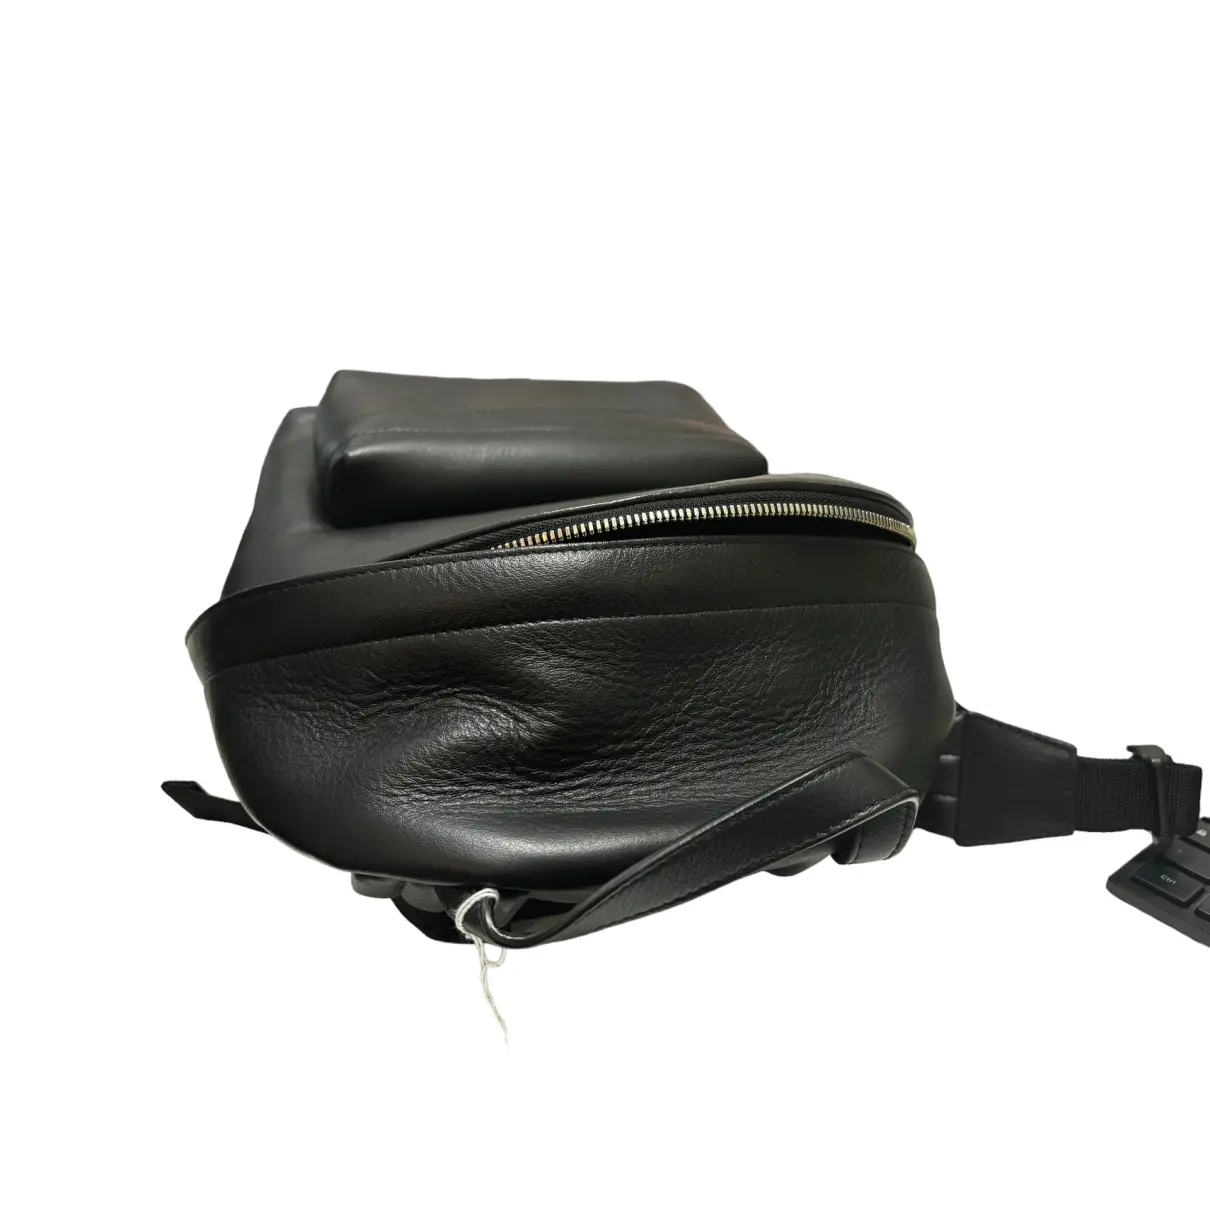 Leather backpack Balenciaga